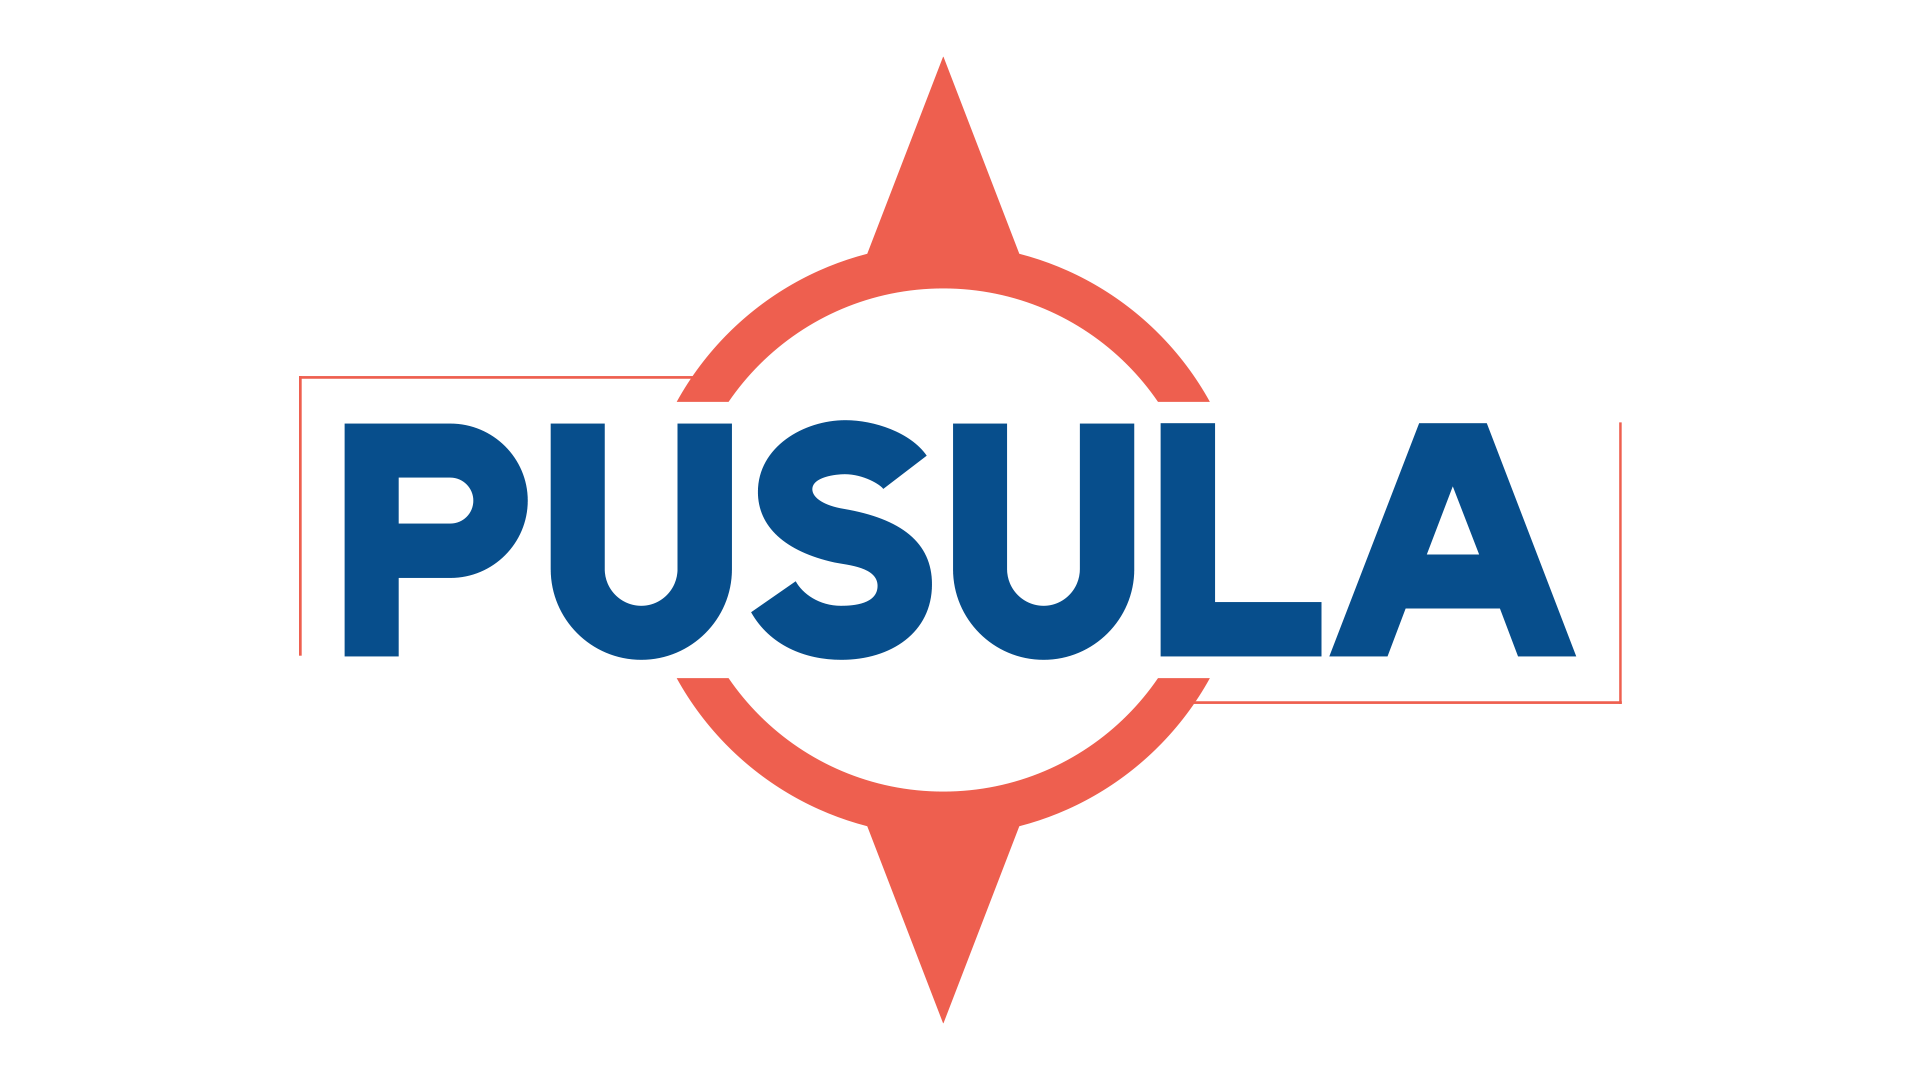 Pusula_Logo.png (45 KB)